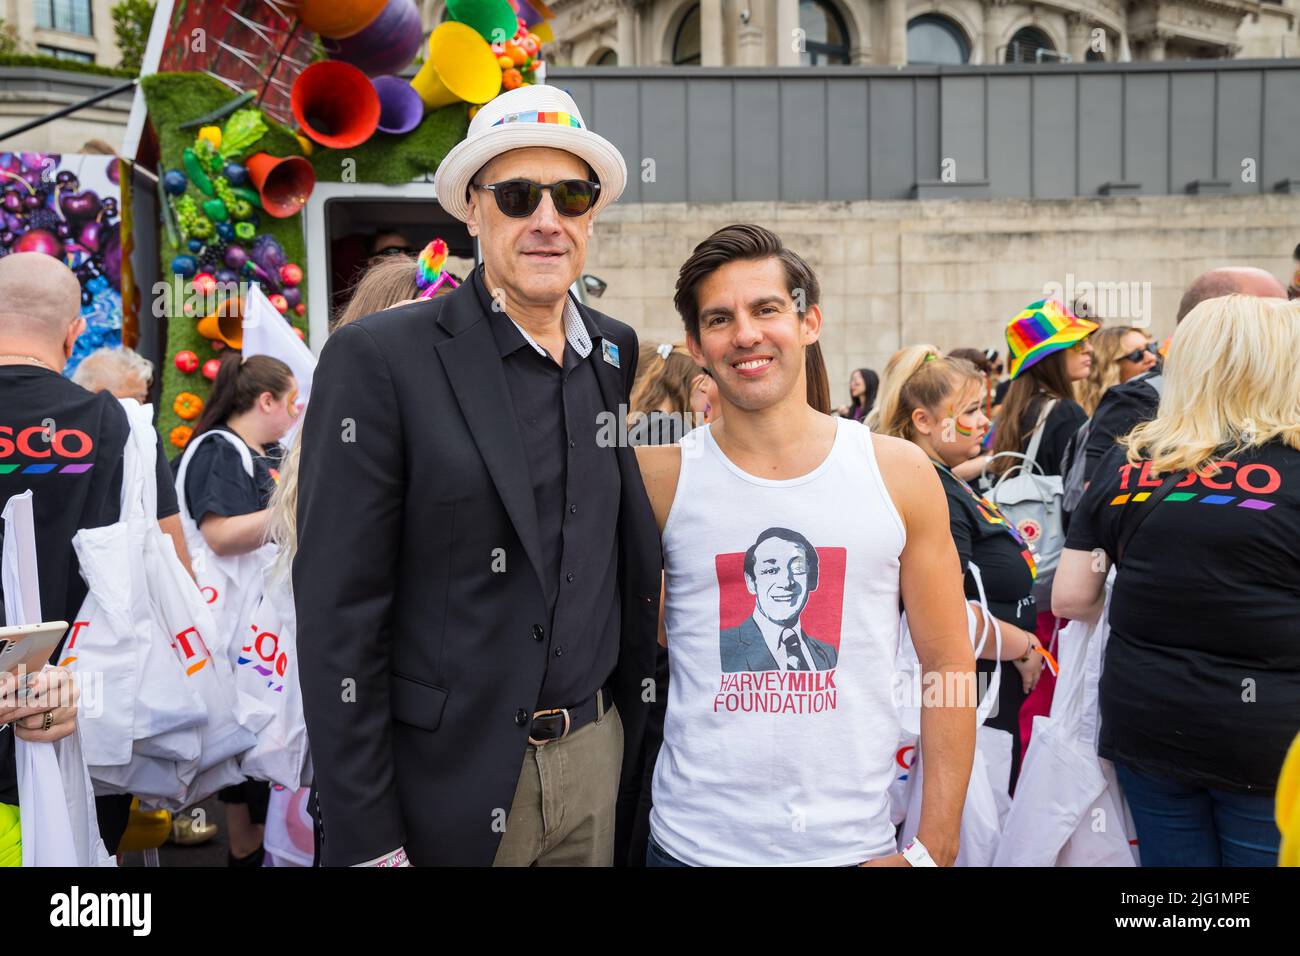 Stuart Millk (nephew of Harvey Milk) and member of the Harvey Milk Foundation at Pride in London Stock Photo